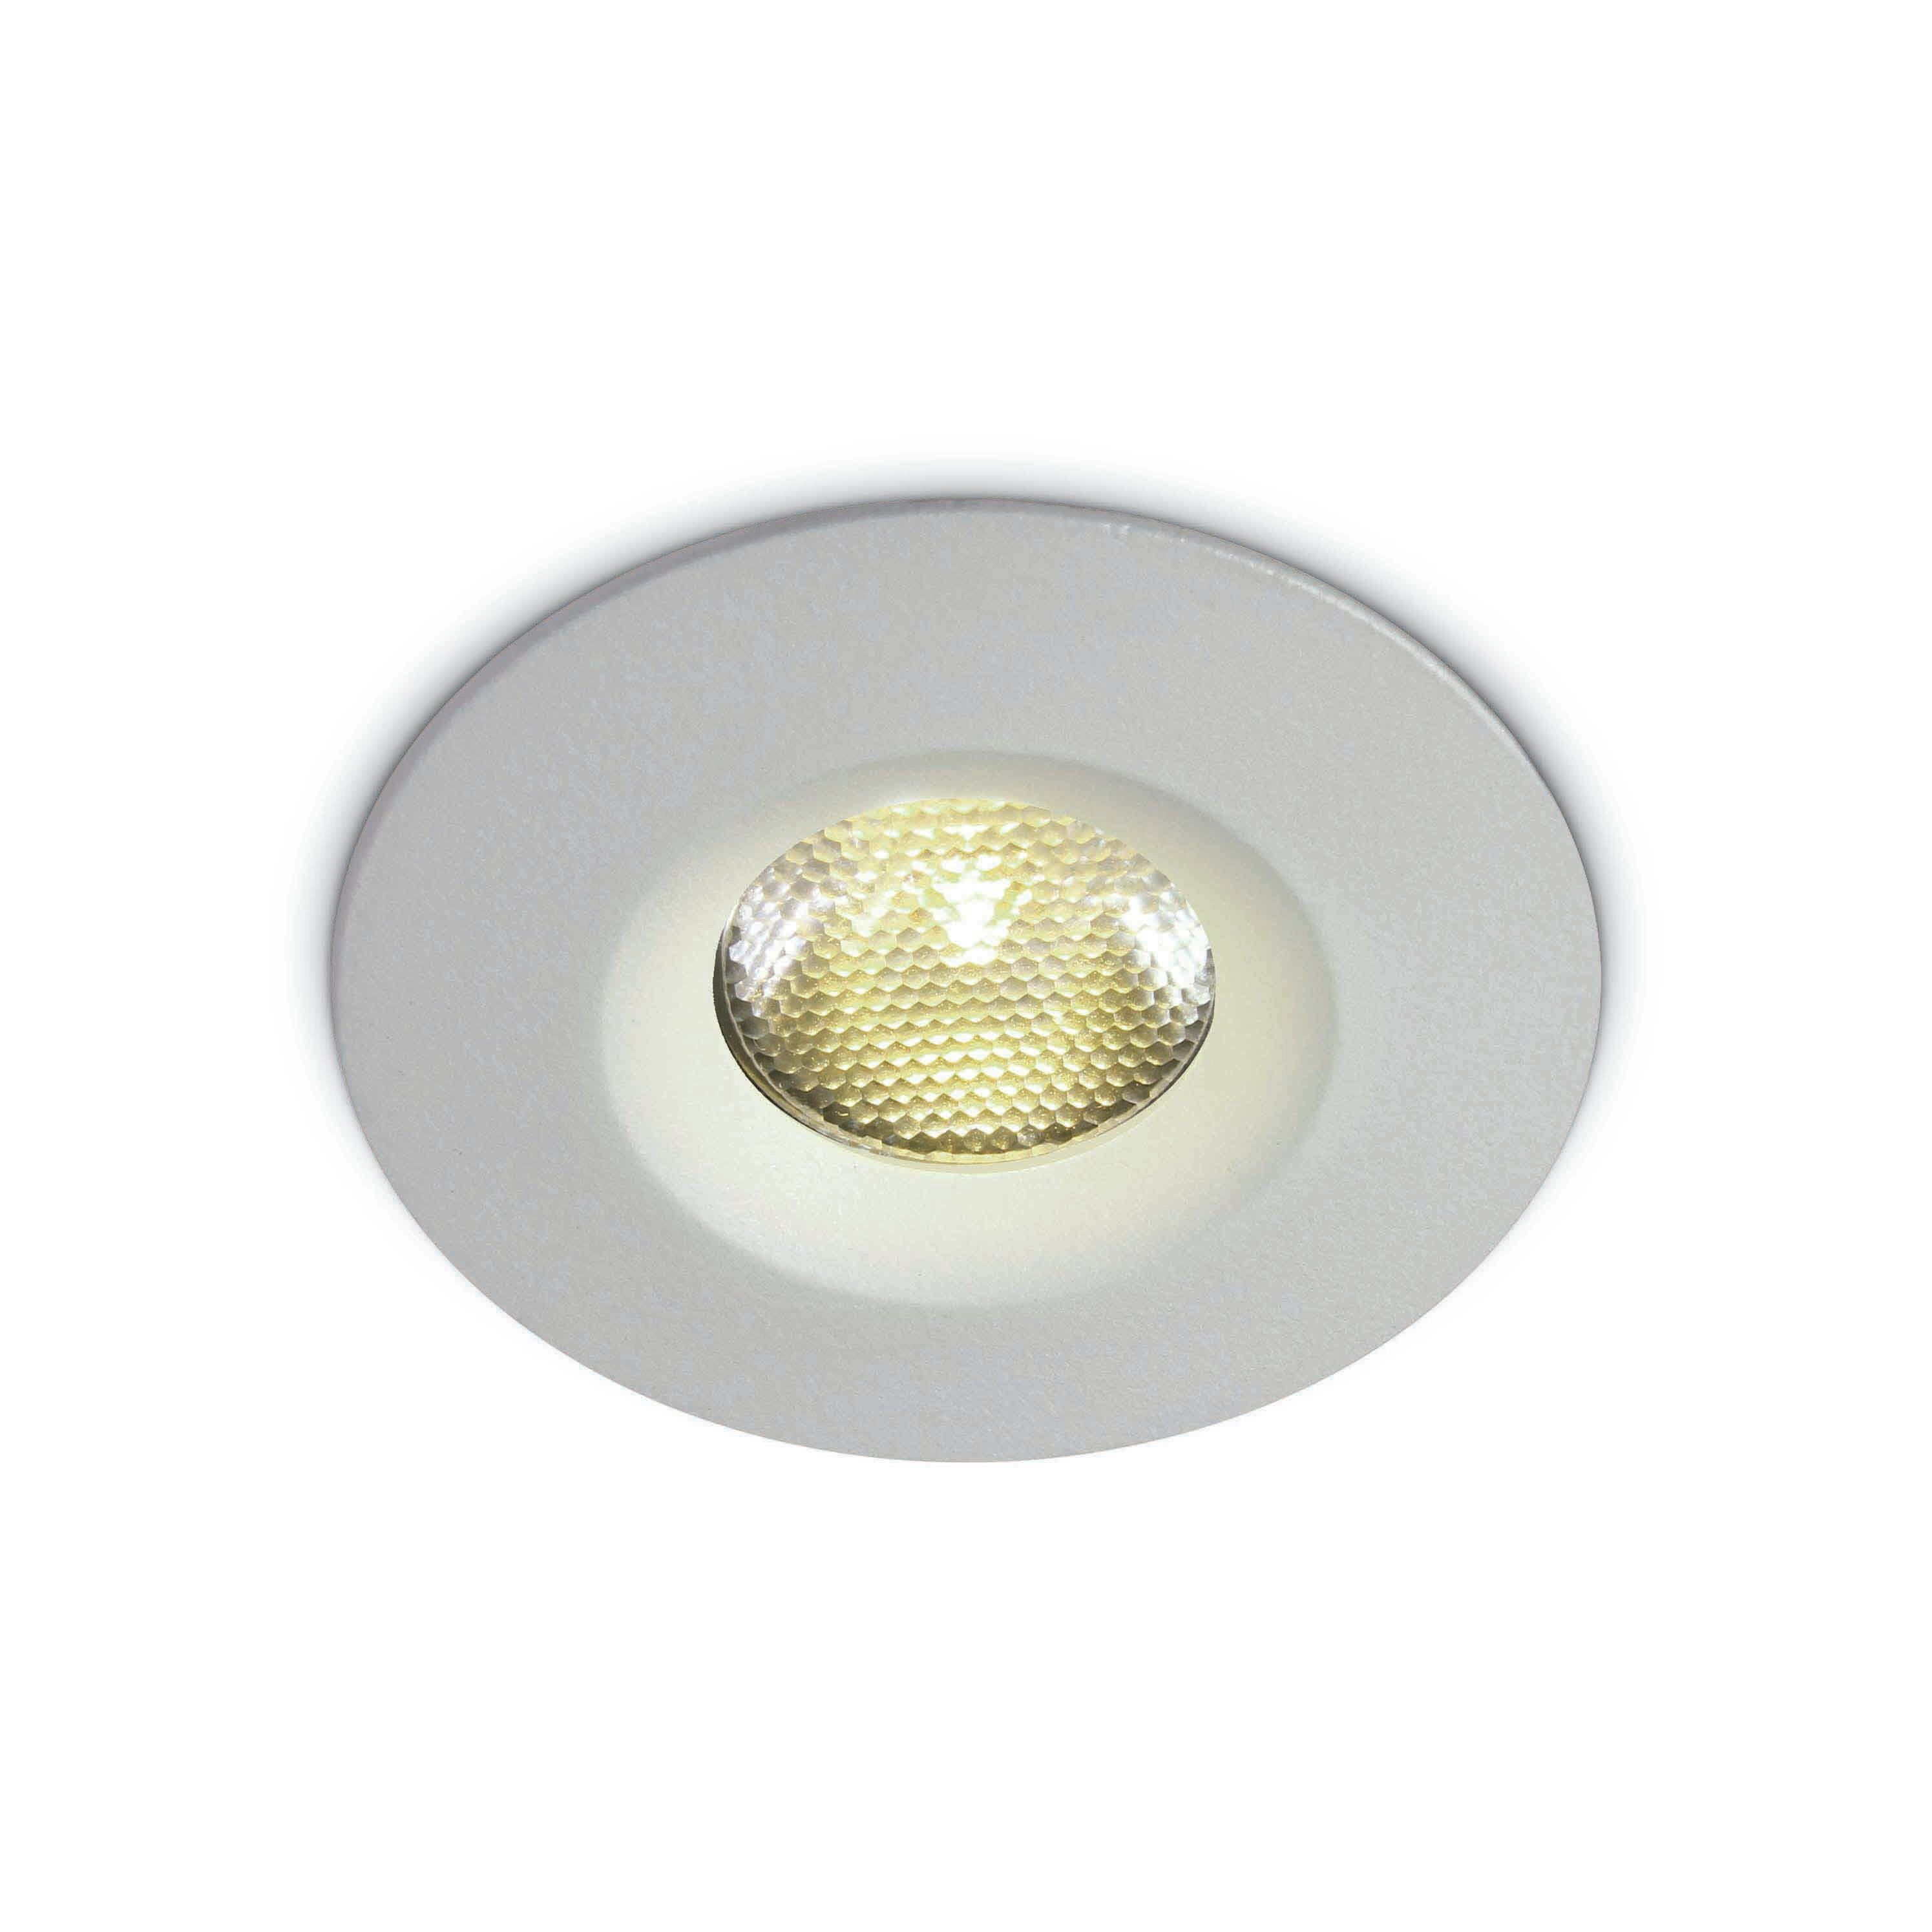 bak Huiswerk maken marge ONE Light - inbouwspot - Ø 46 mm, Ø 38 mm inbouwmaat - 3W dimbare LED incl.  - IP65 - wit | Lichtkoning